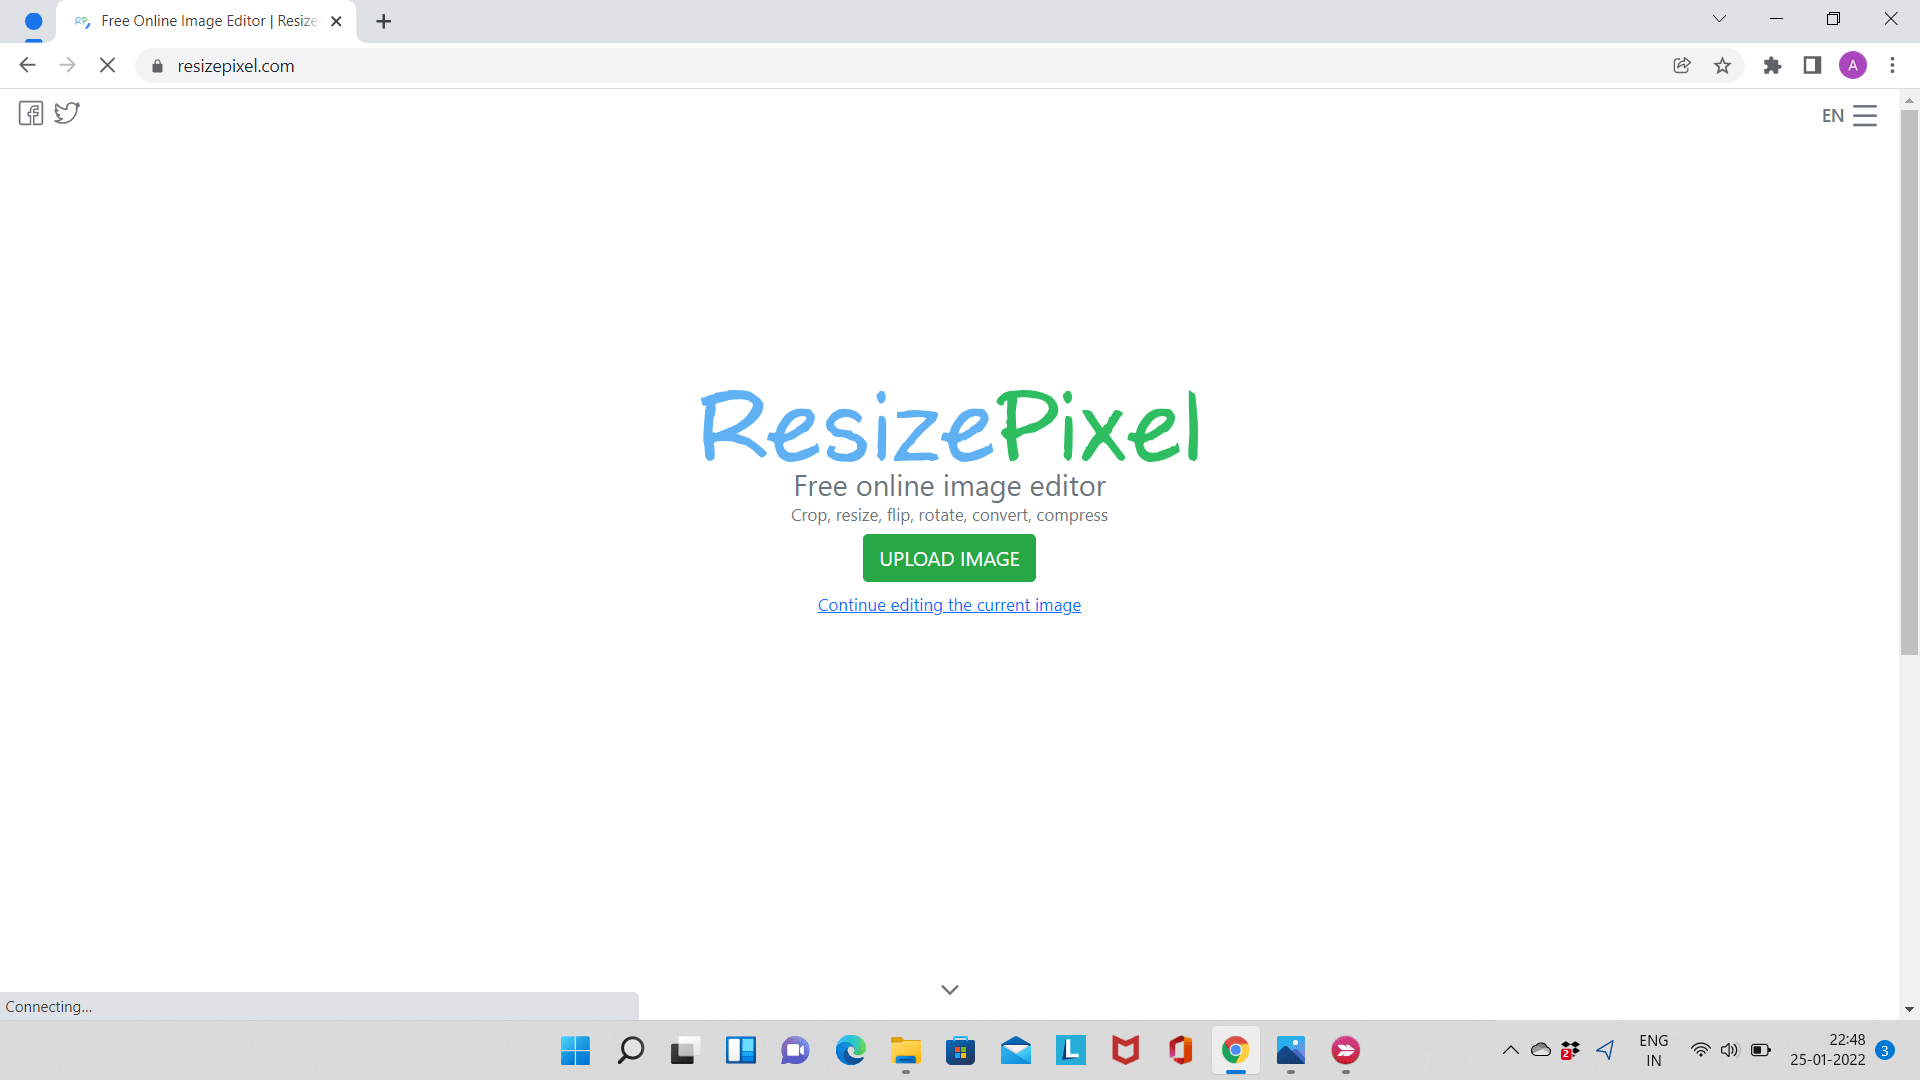 ResizePixel